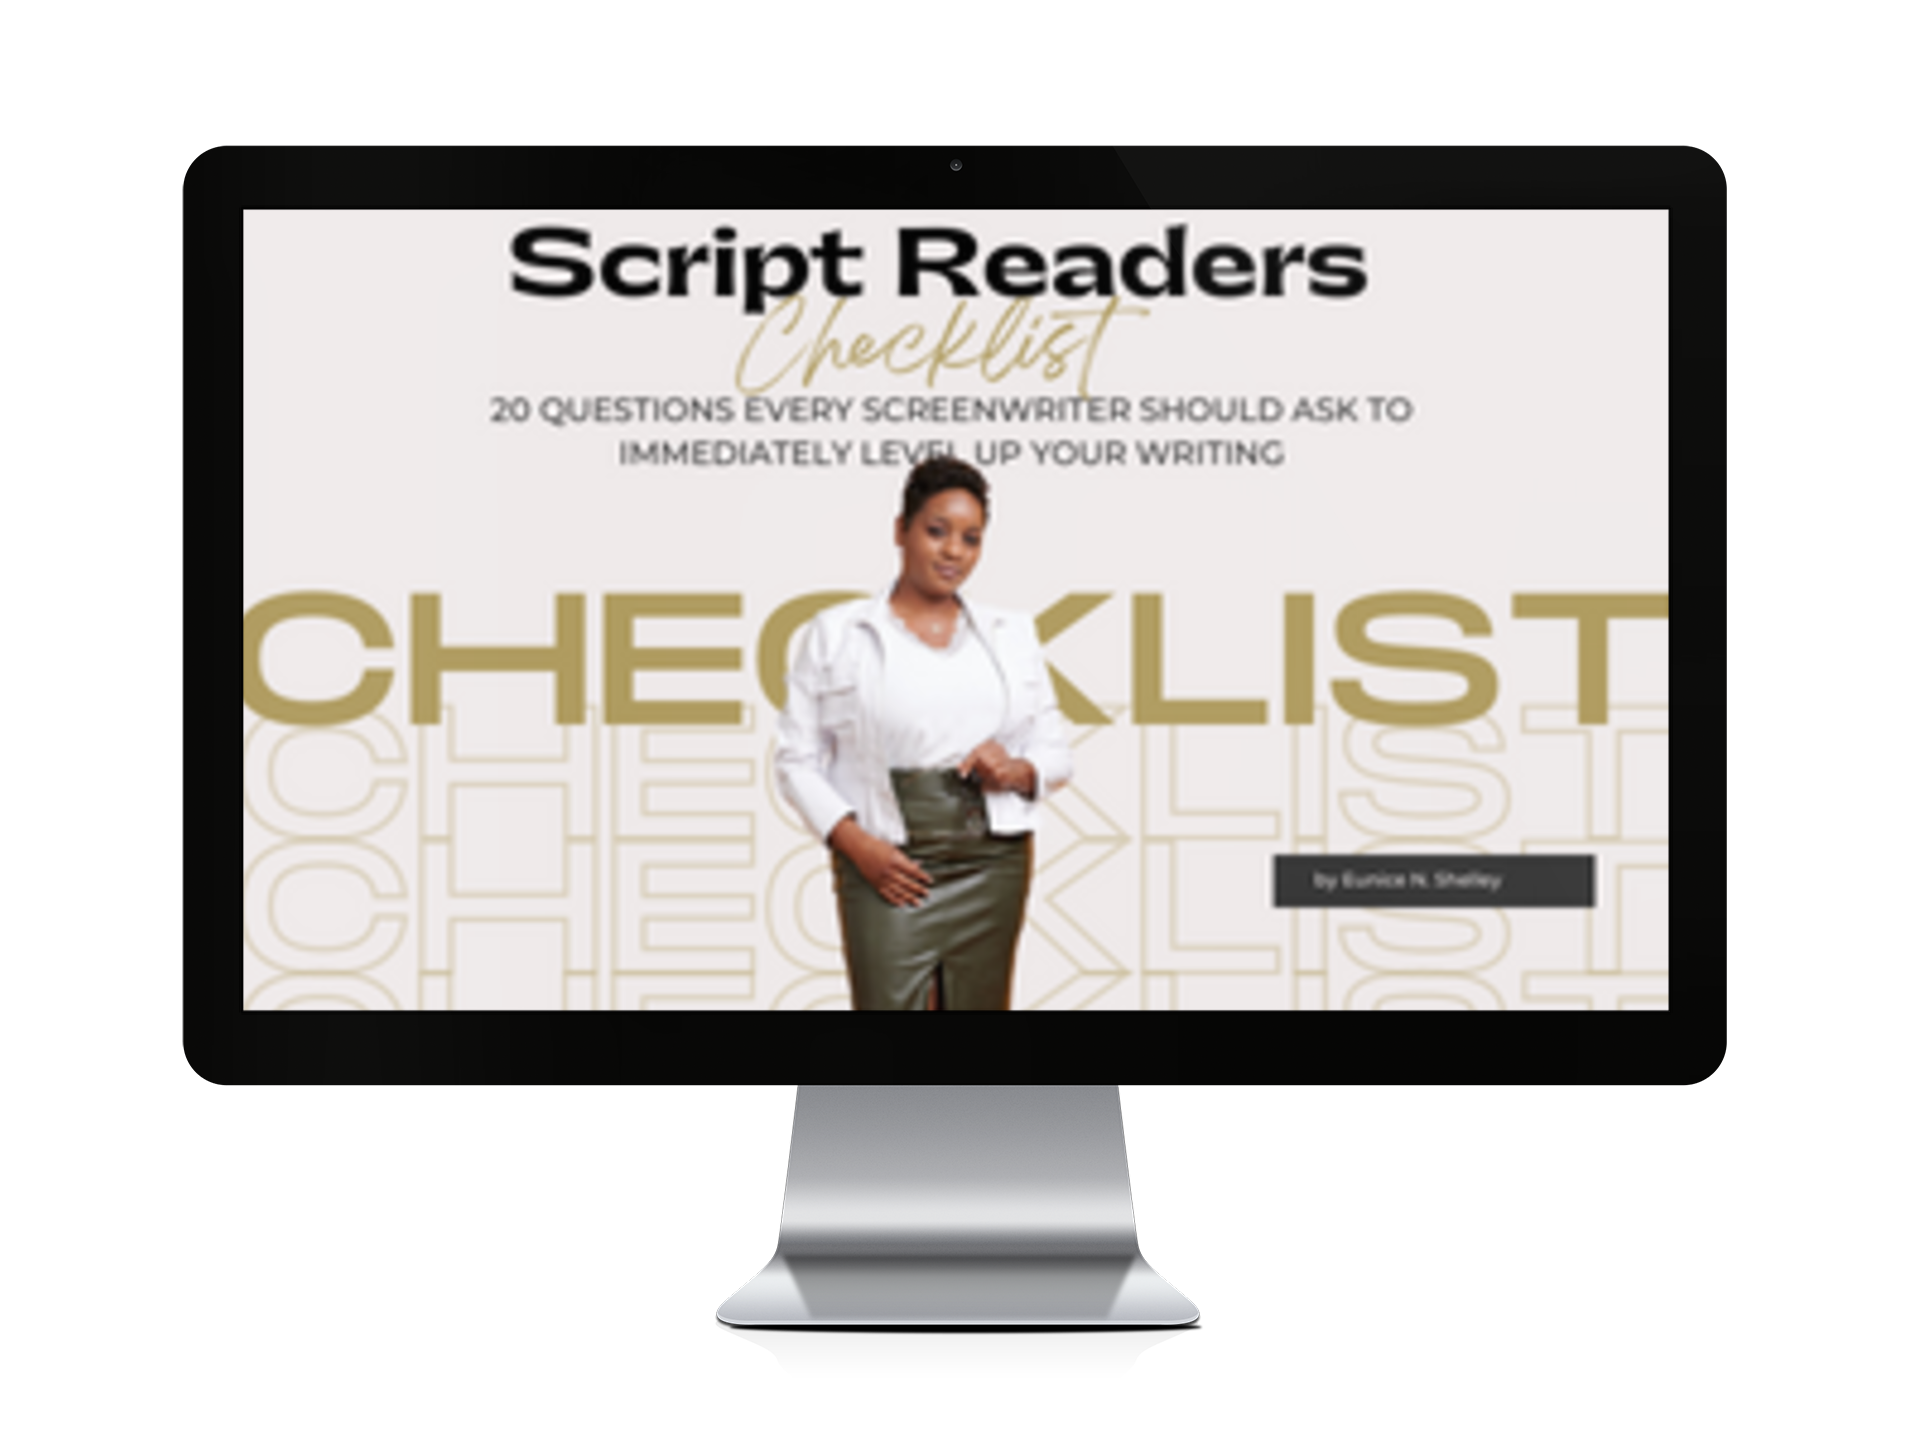 Script Reader Checklist